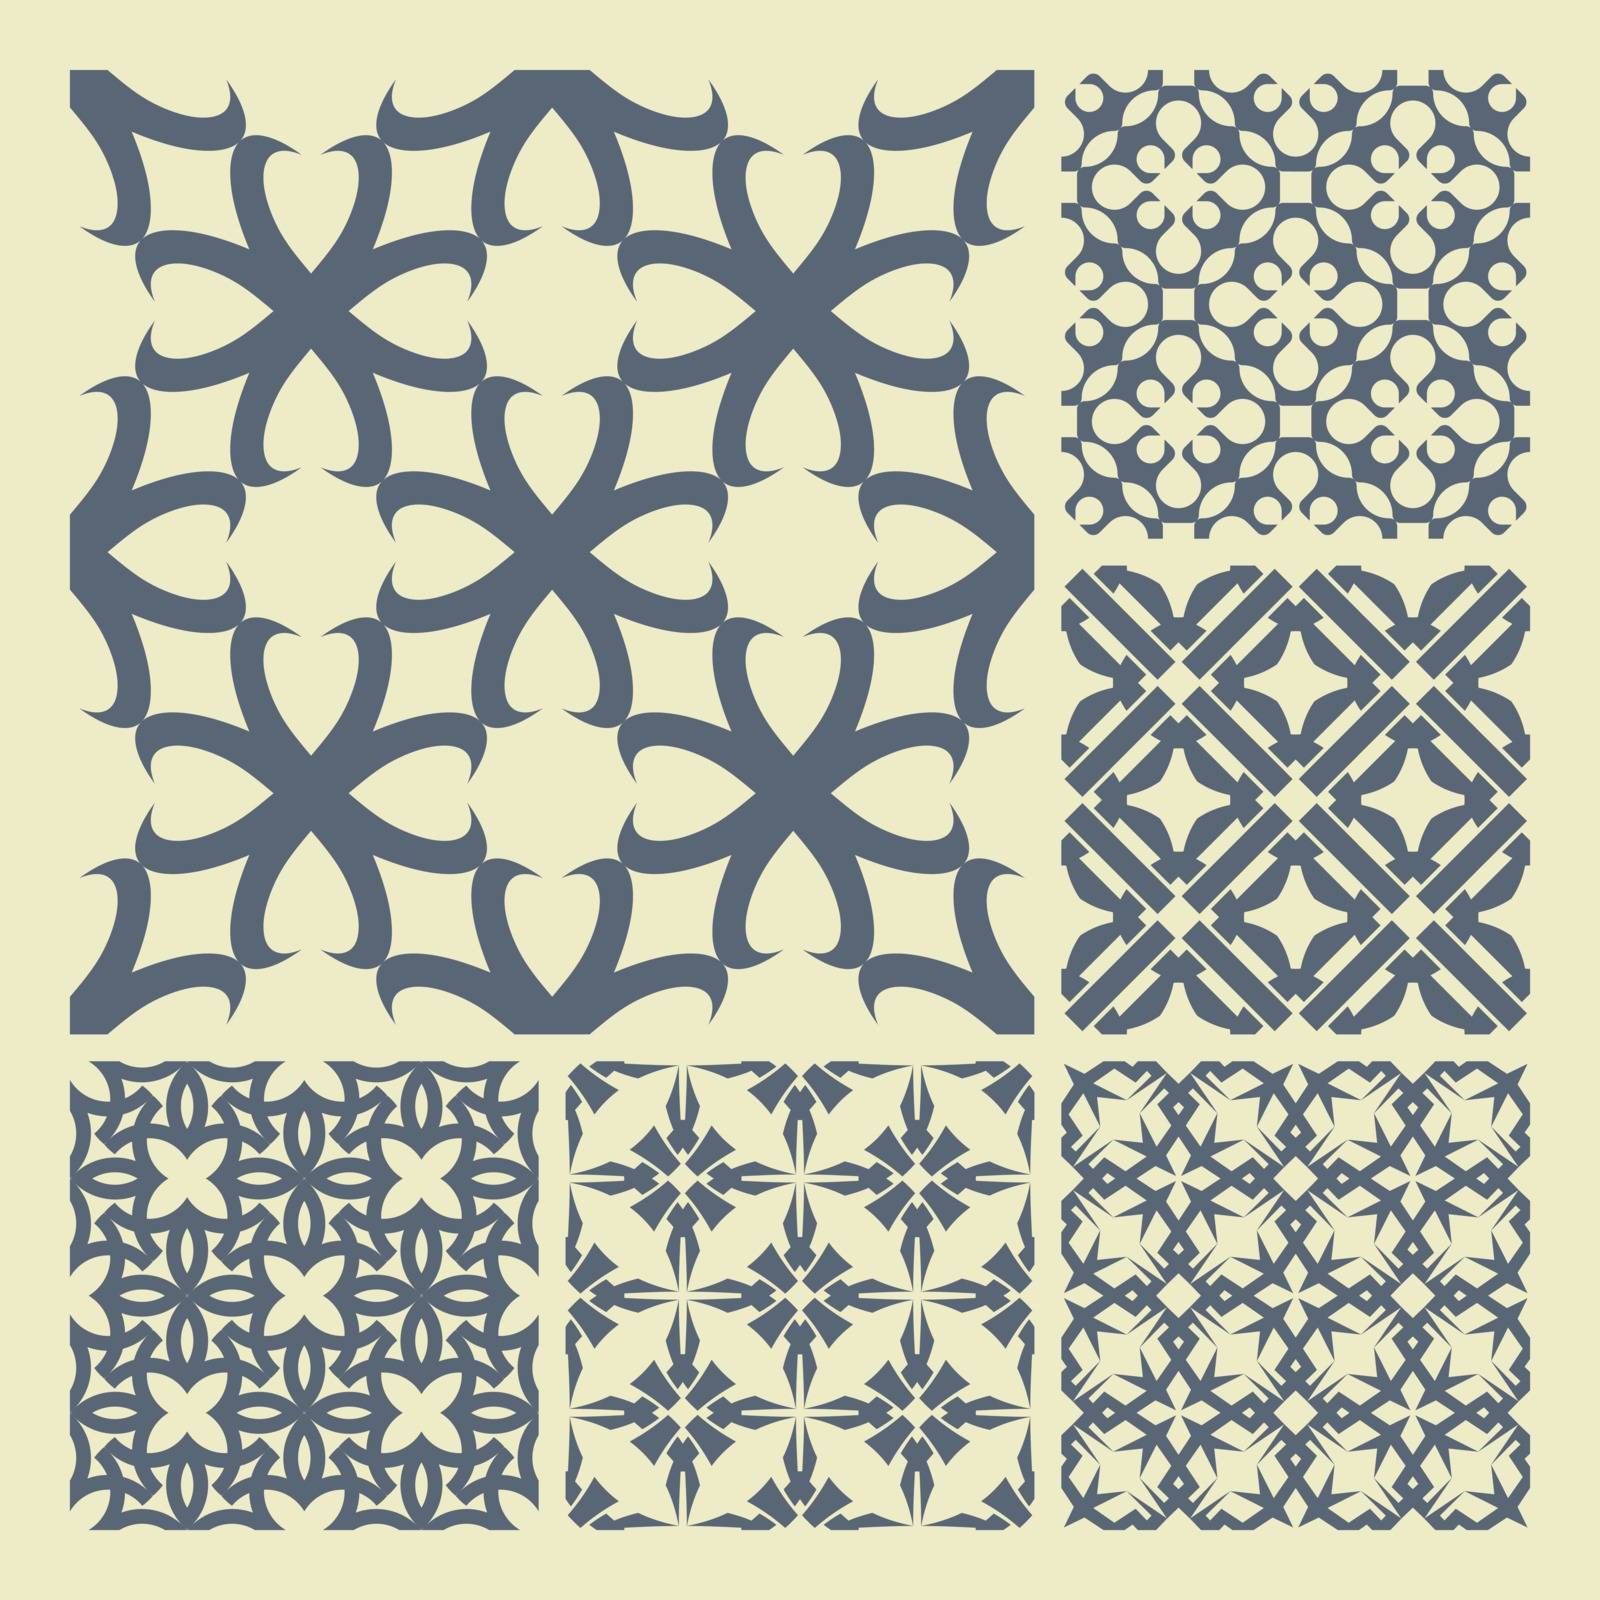 Seamless geometric pattern. Abstract illustration.